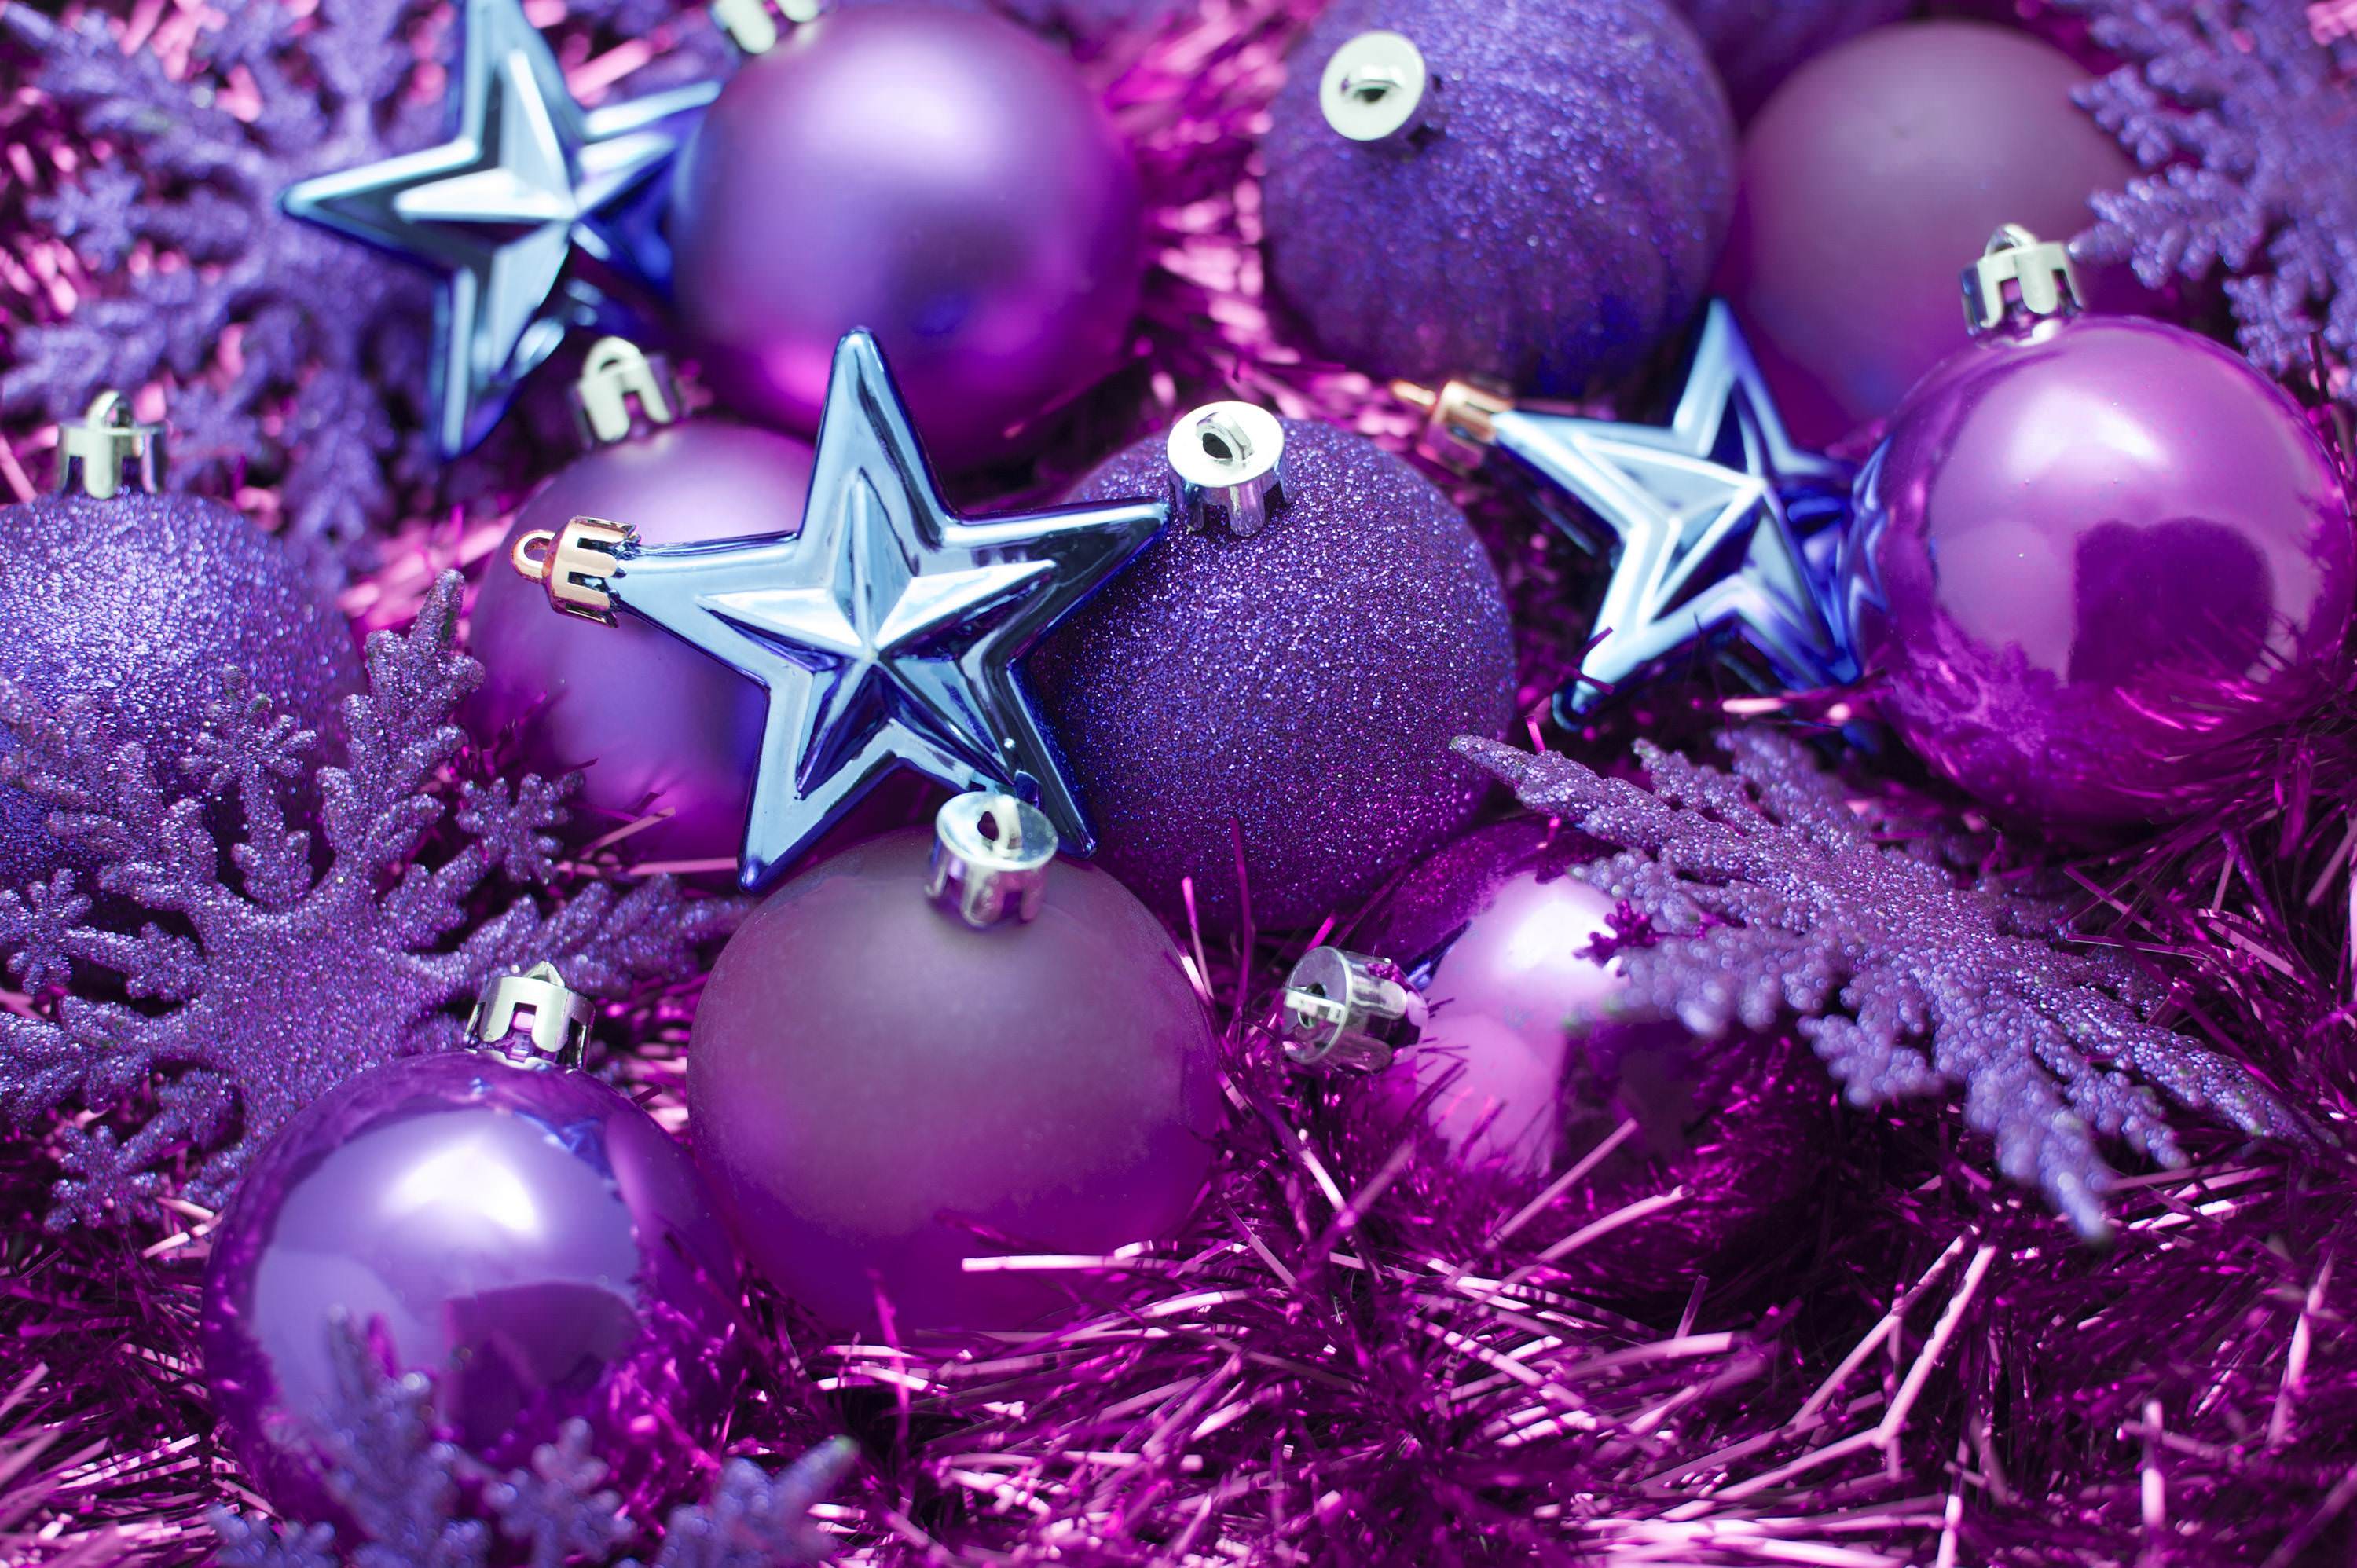 Purple Christmas Background